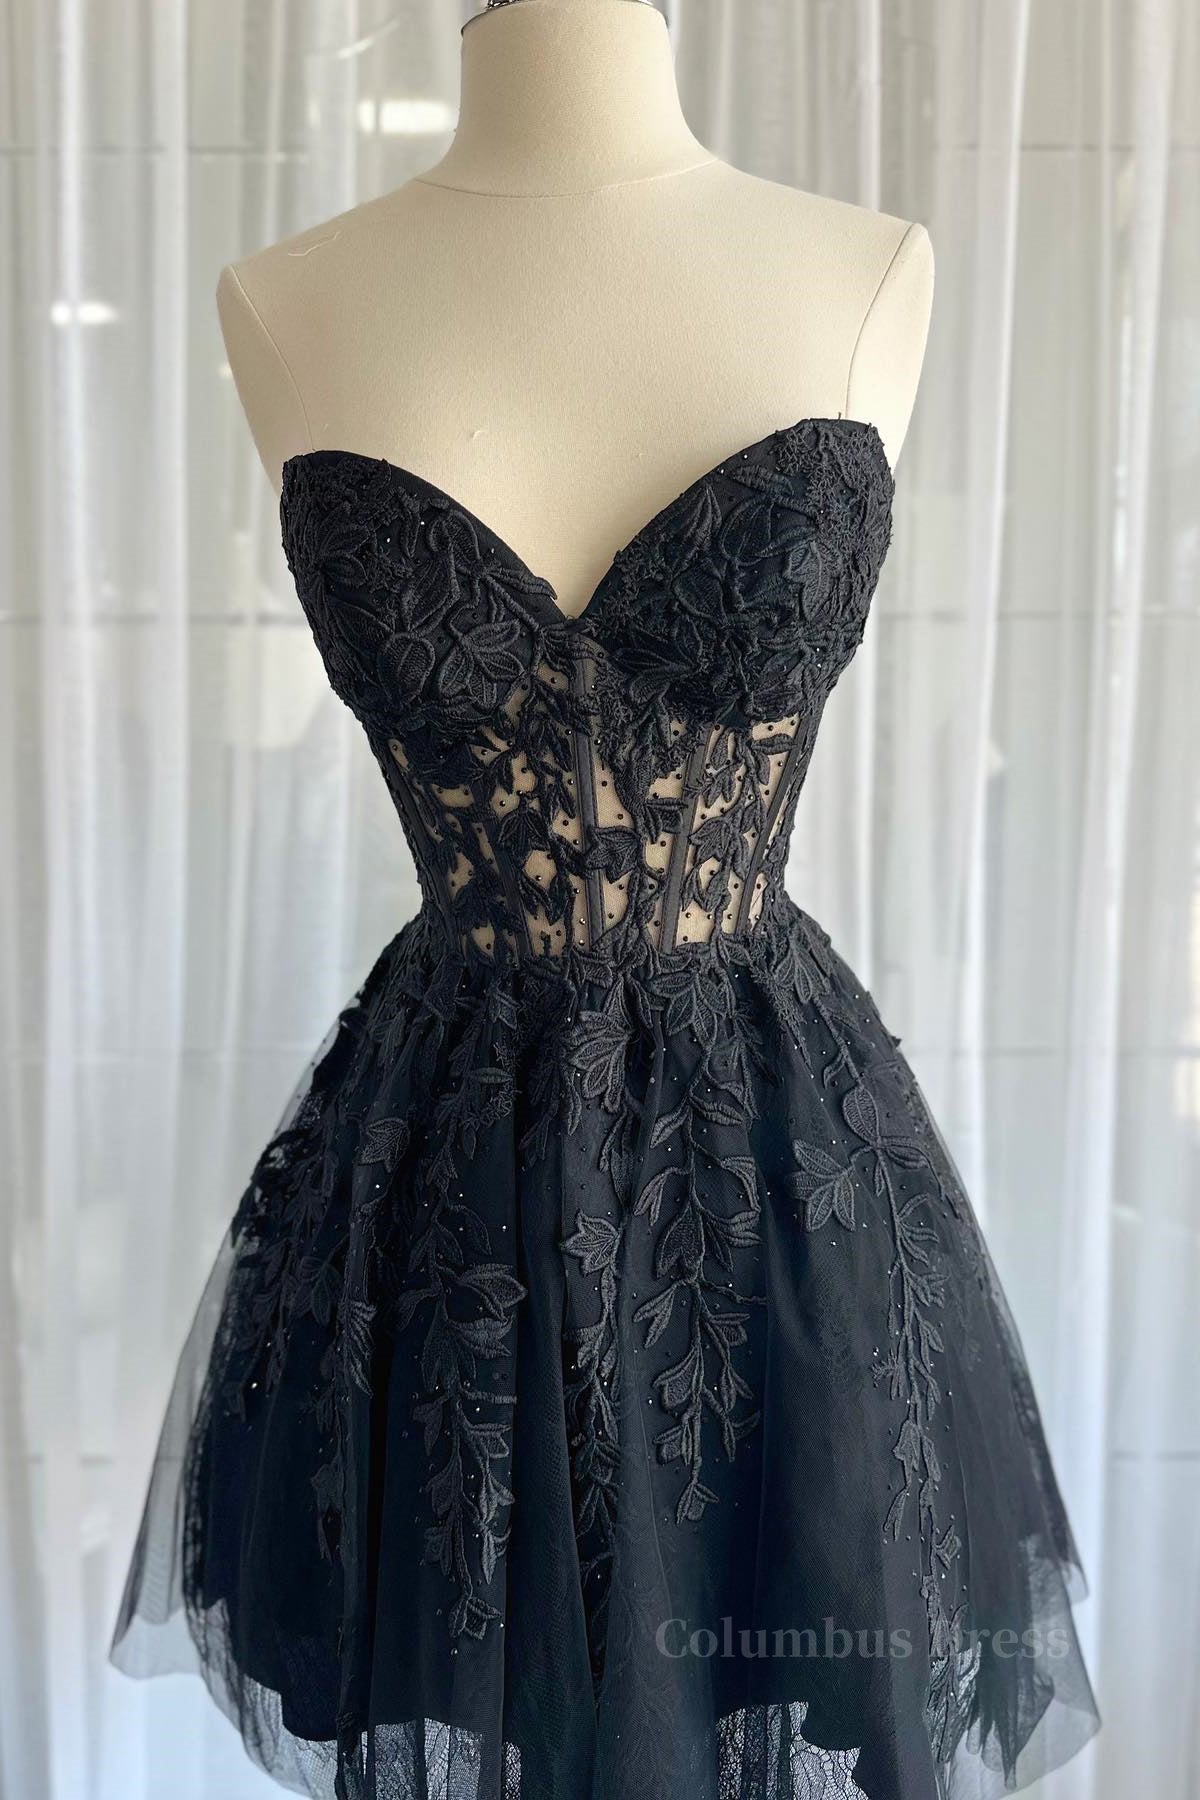 Strapless Short Black Lace Corset Prom Dresses, Short Black Lace Corset Formal Corset Homecoming Dresses outfit, Evening Dresses For Sale